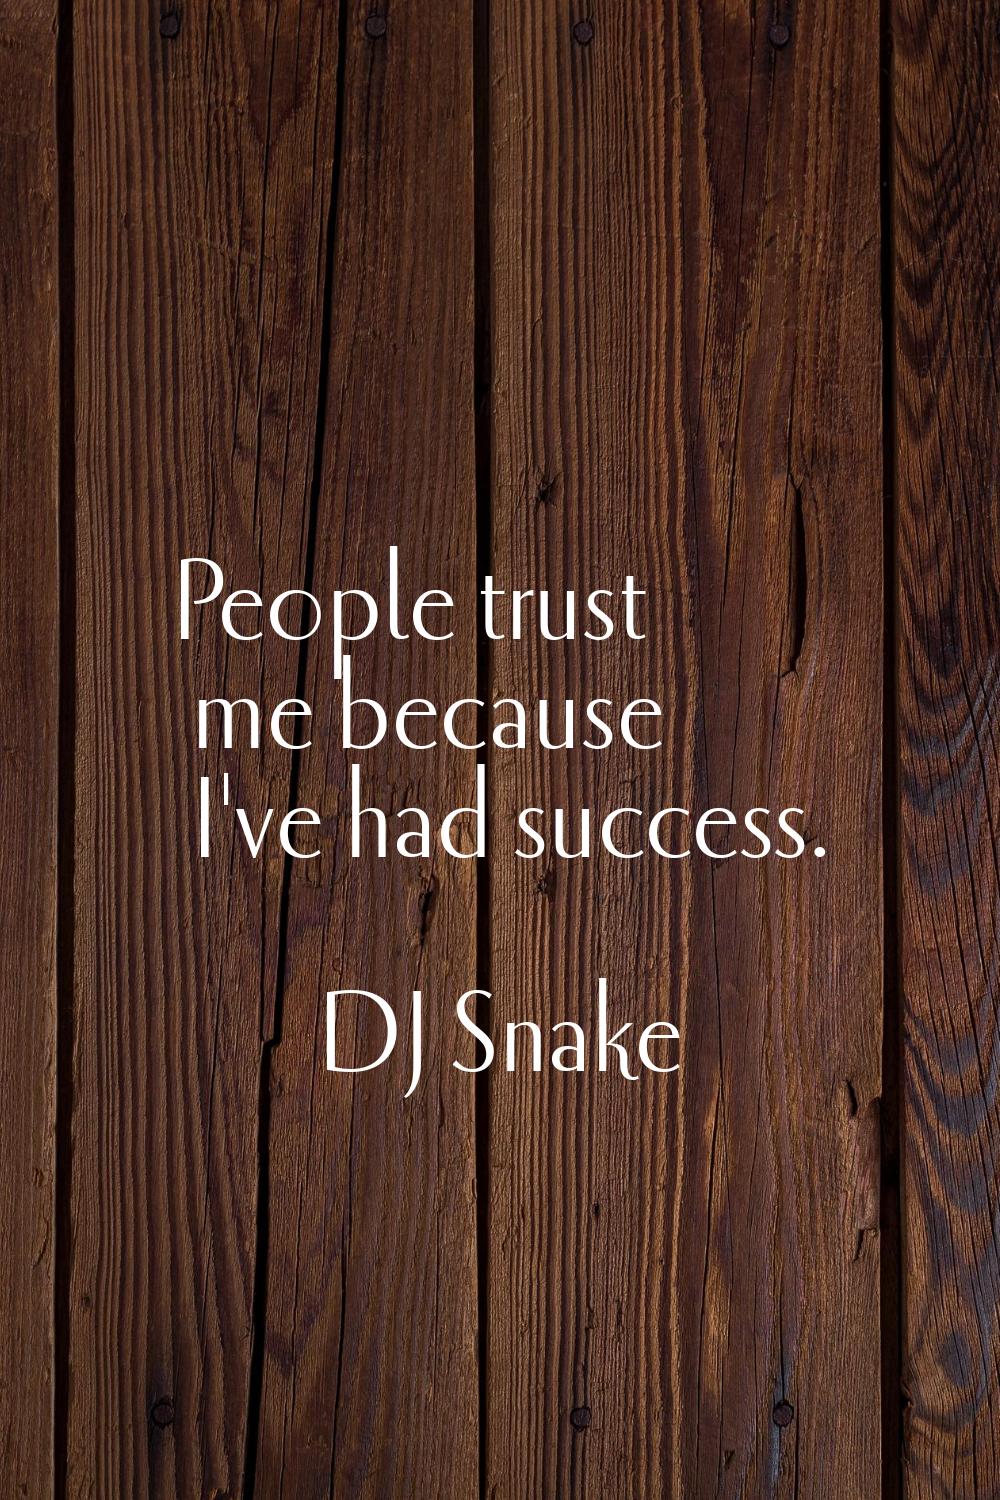 People trust me because I've had success.